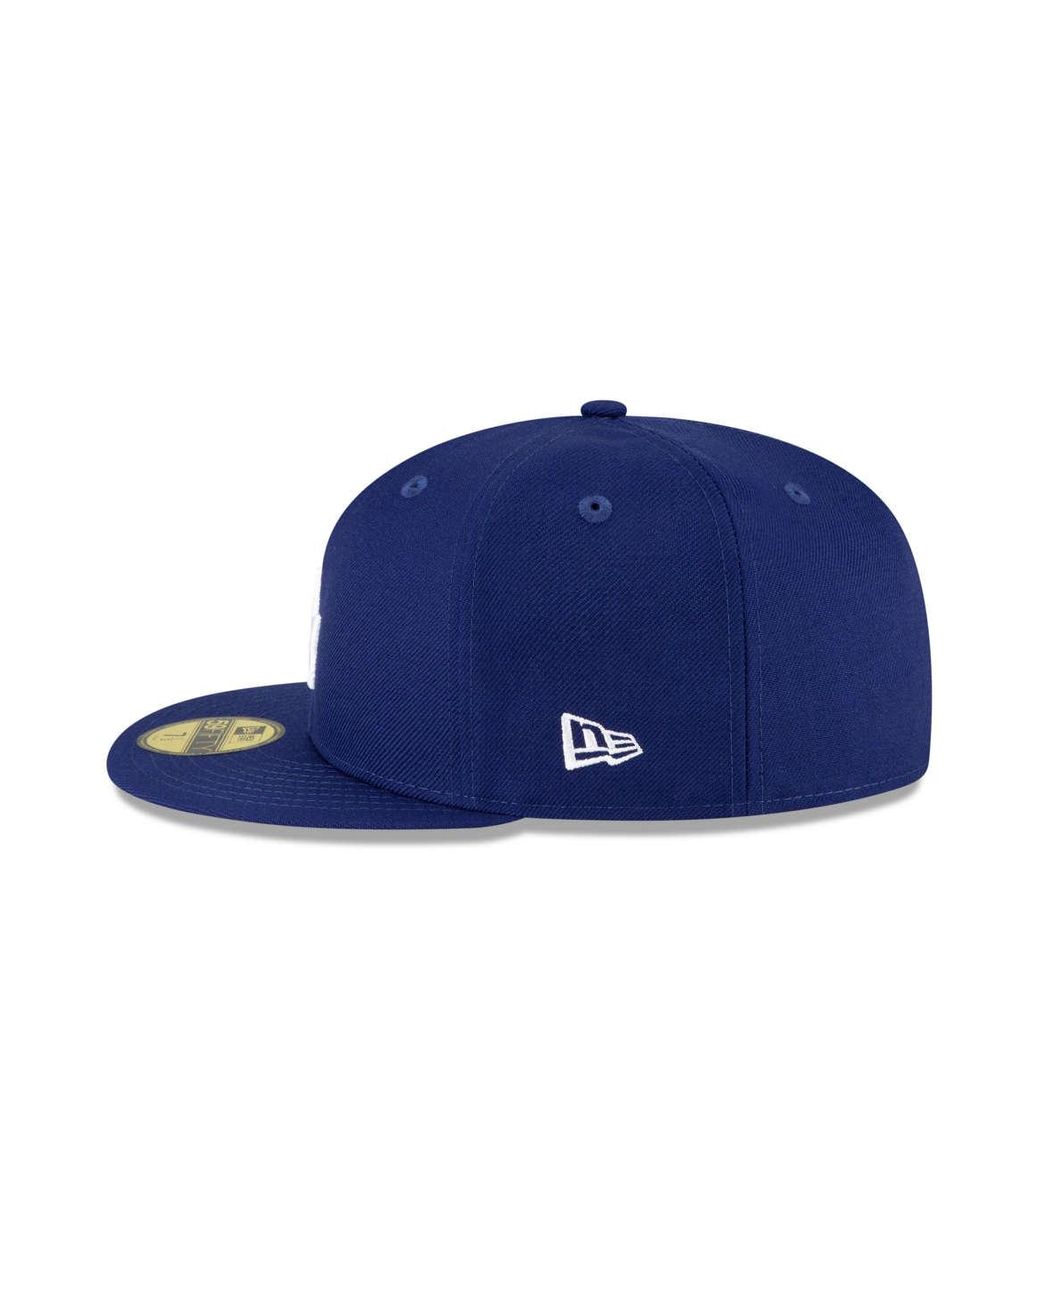 KTZ Nicaragua World Baseball Classic 59fifty Cap in Blue for Men